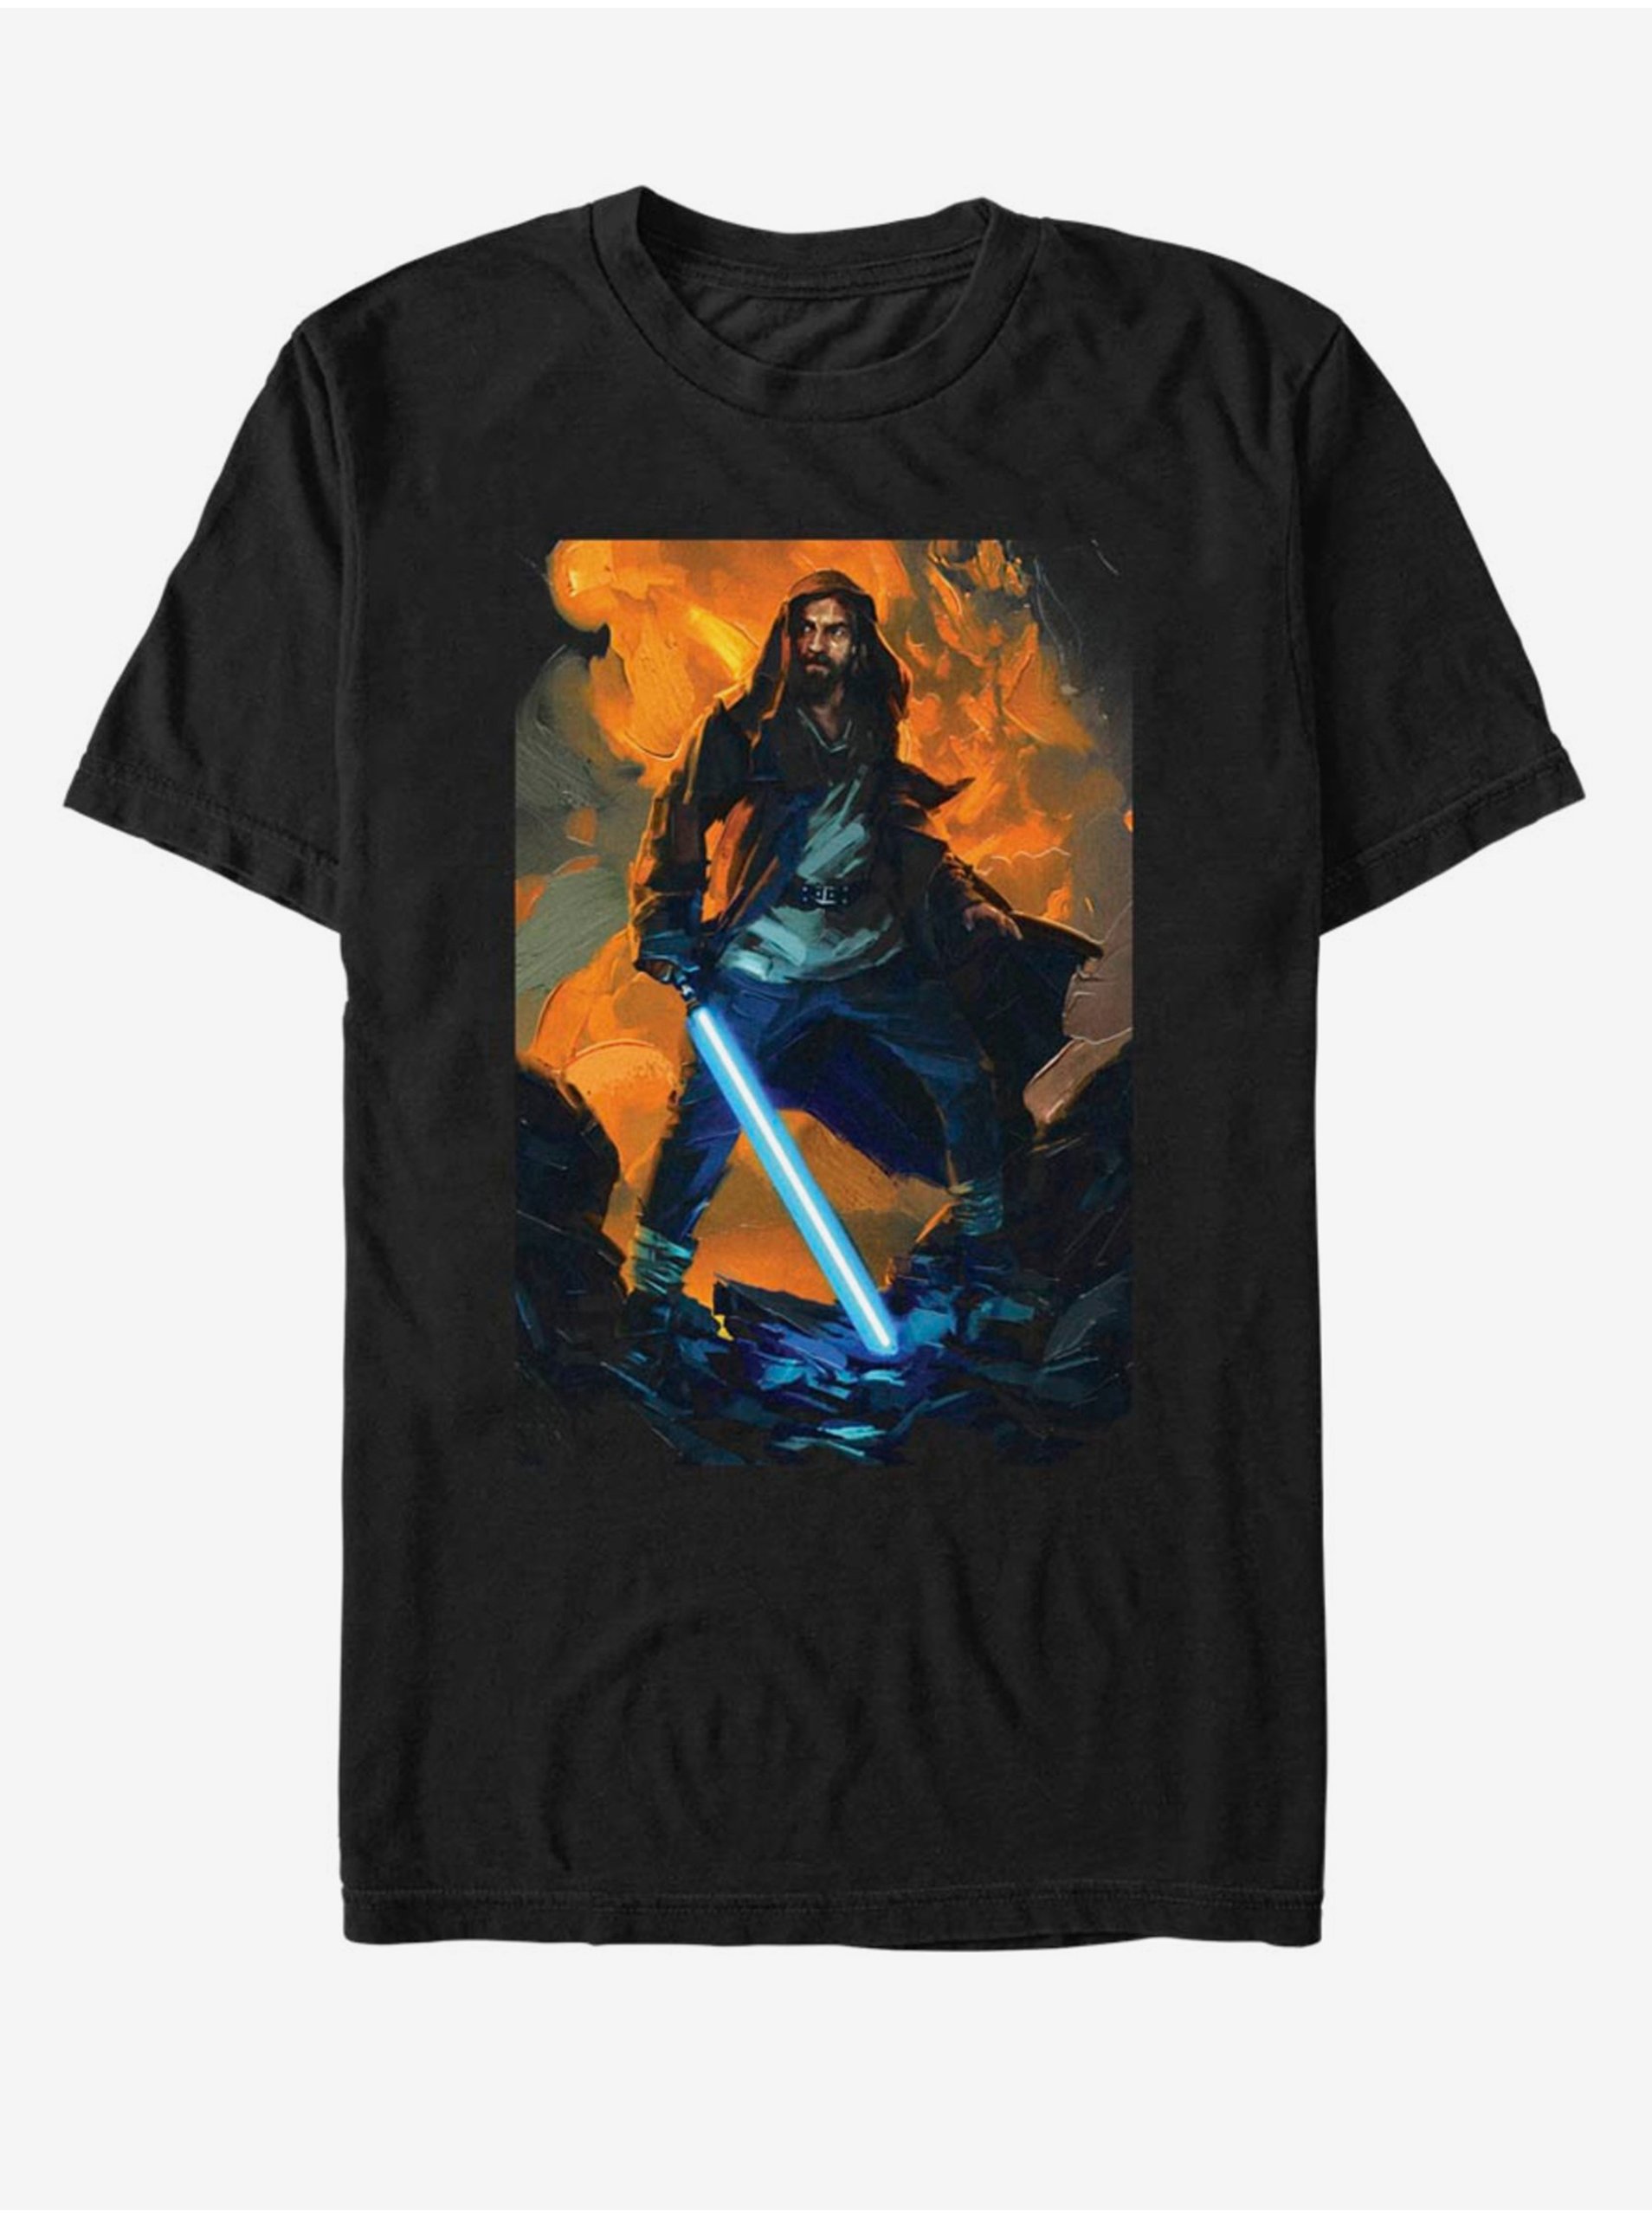 Lacno Obi Wan Kenobi ZOOT. FAN Star Wars - unisex tričko